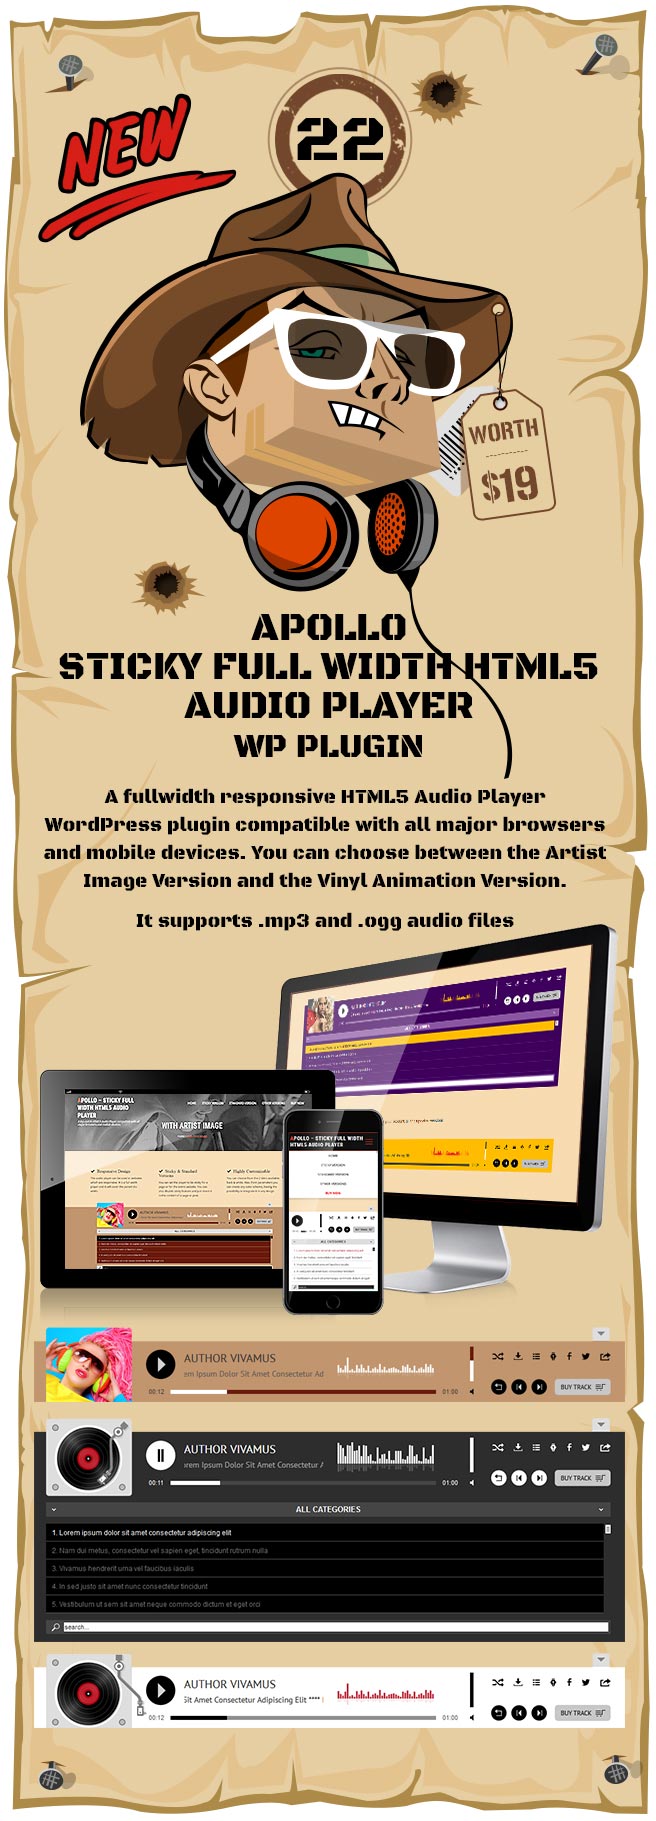 Apollo - Fullwidth Sticky HTML5 Audio Player - WordPress Plugin